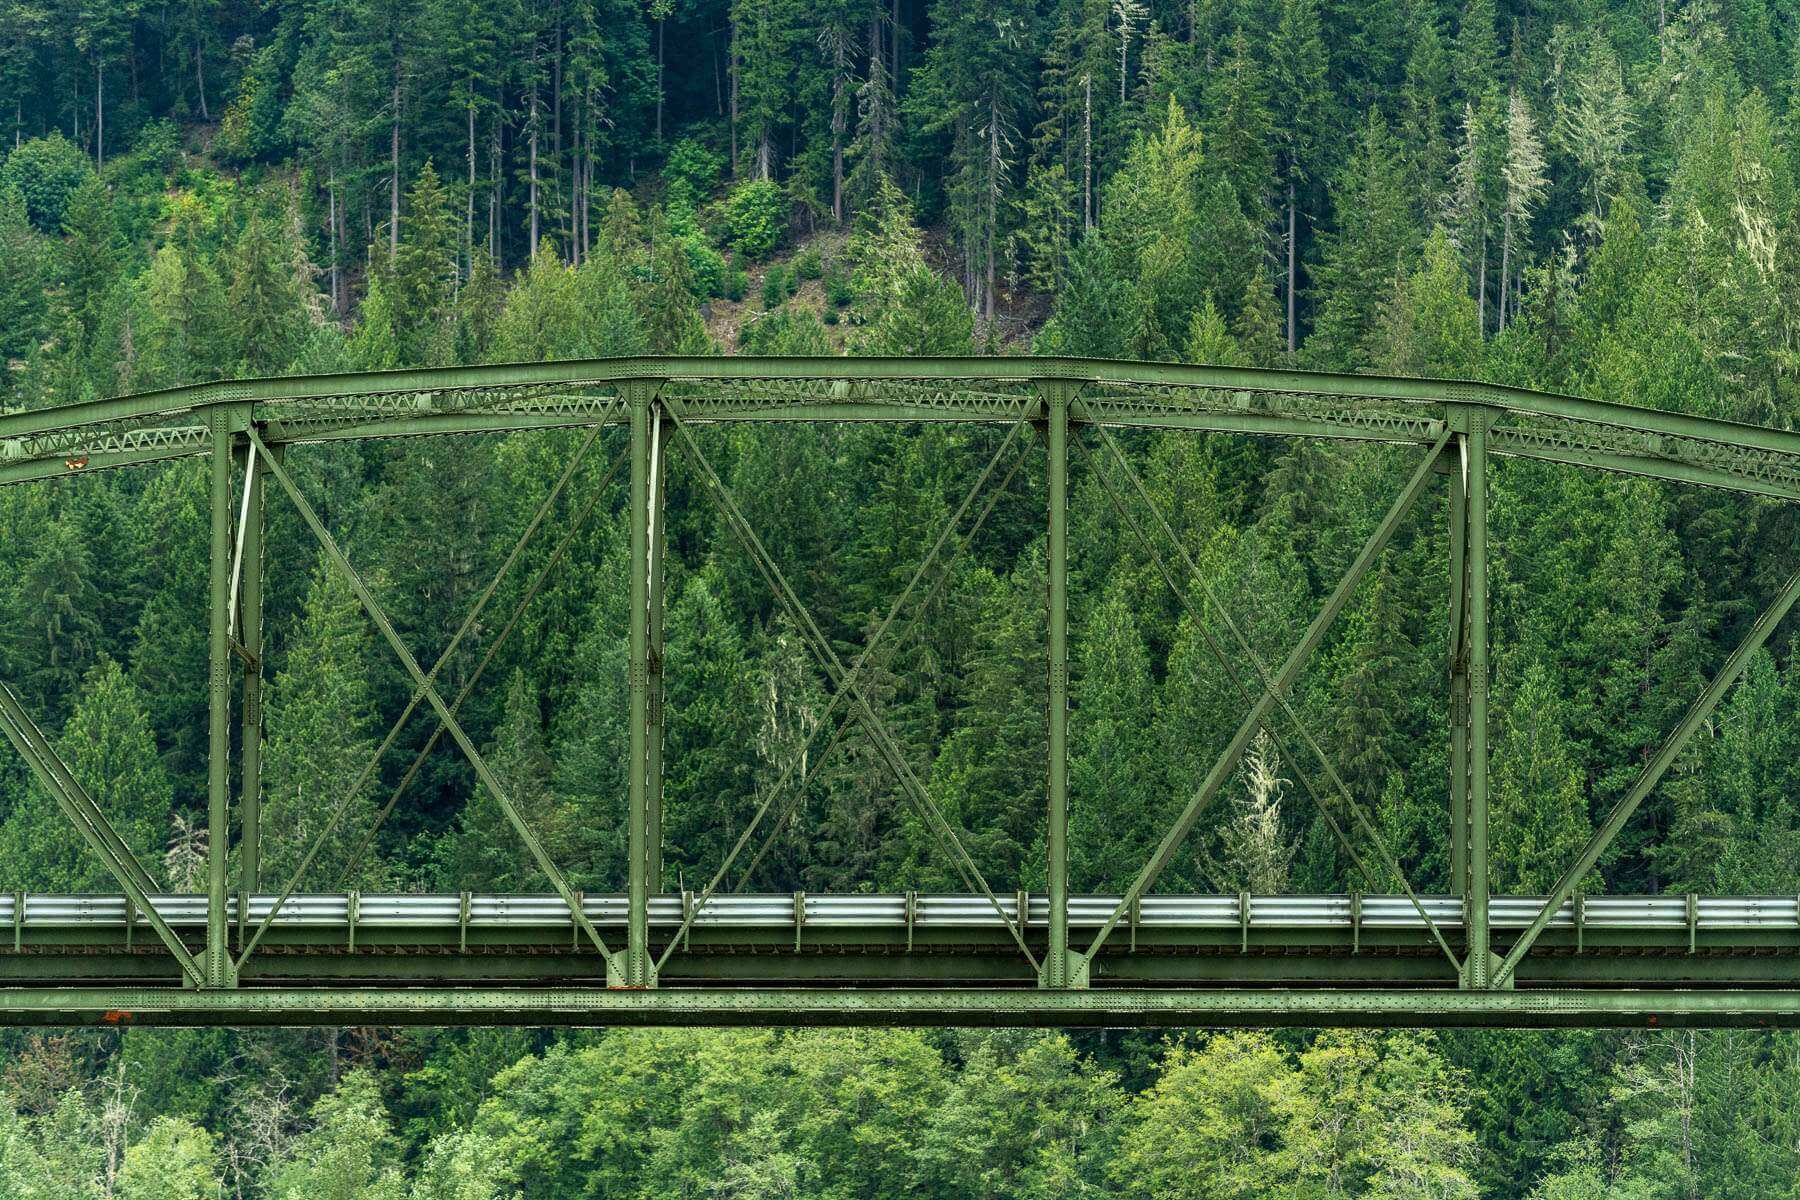 Railroad trestle bridge through the forest in Washington State